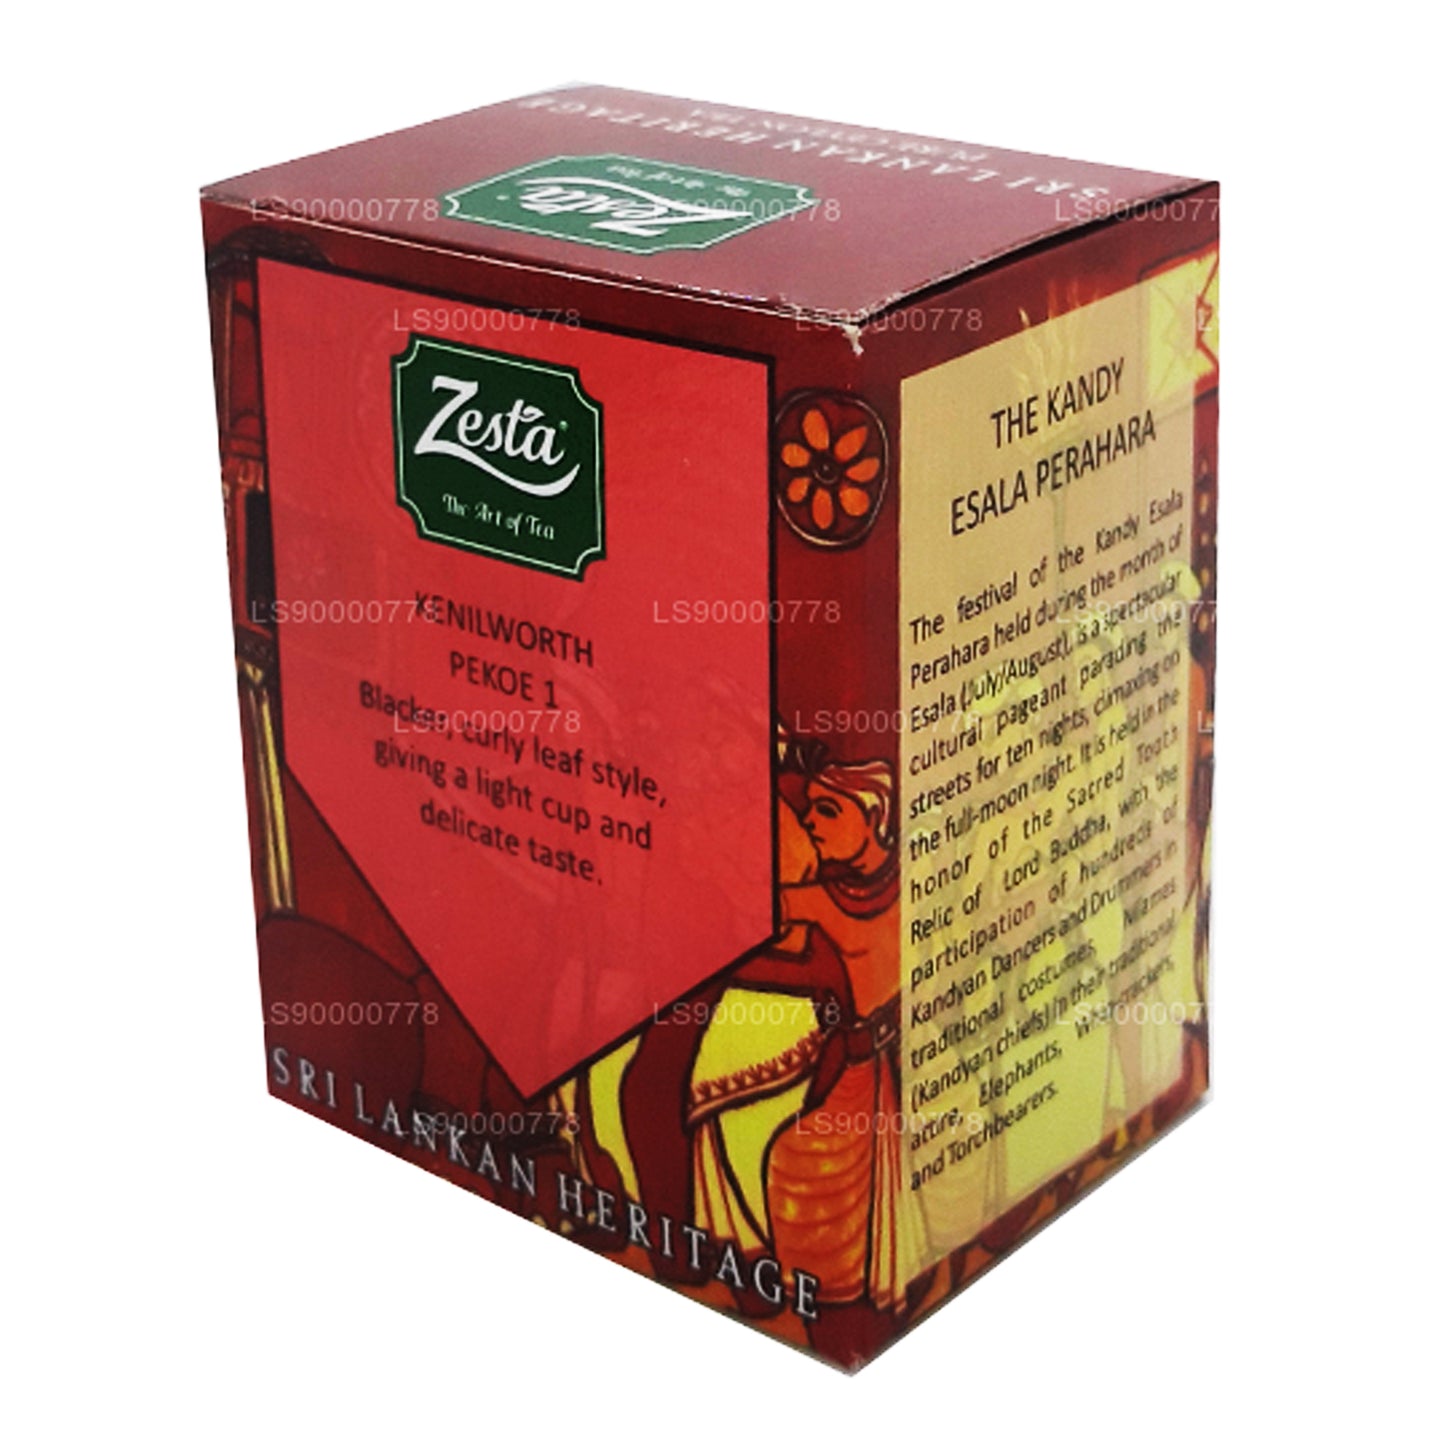 Zesta Sri Lankan Heritage Pure Ceylon Tee Kenilworth PEKOE 1 (100 g)